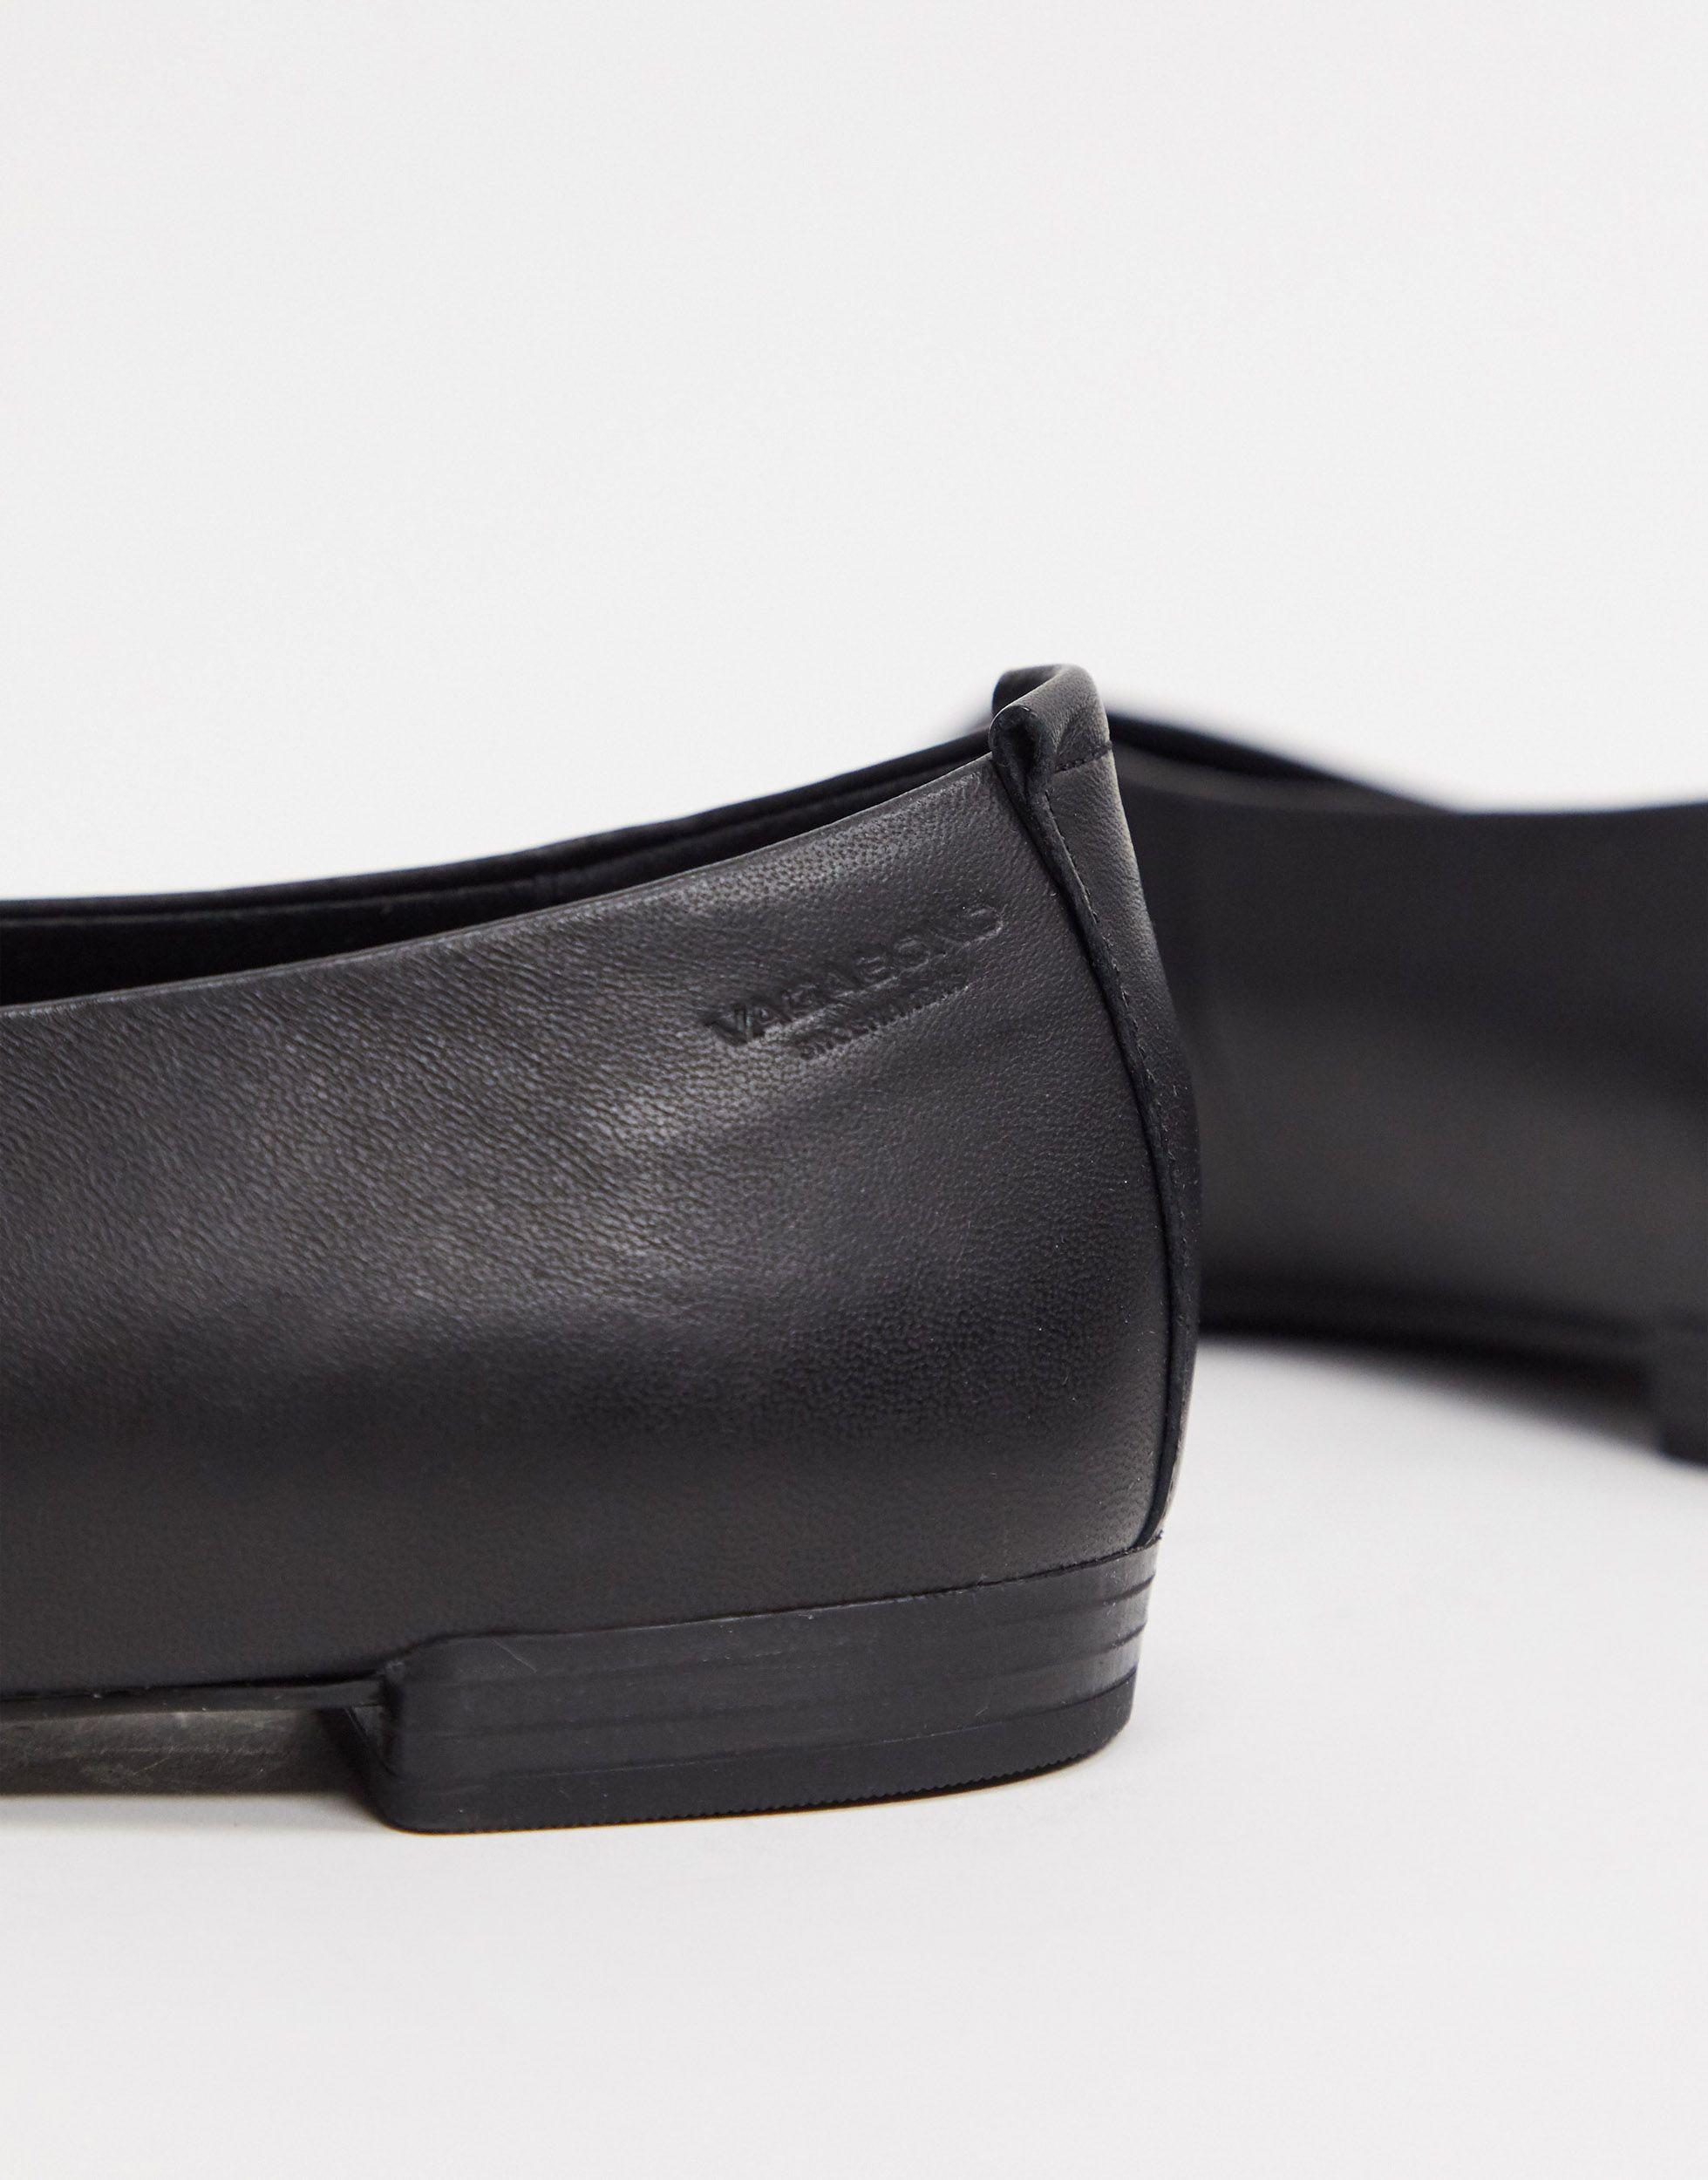 Vagabond Shoemakers Celia Soft Leather Ballet Flats in Black | Lyst